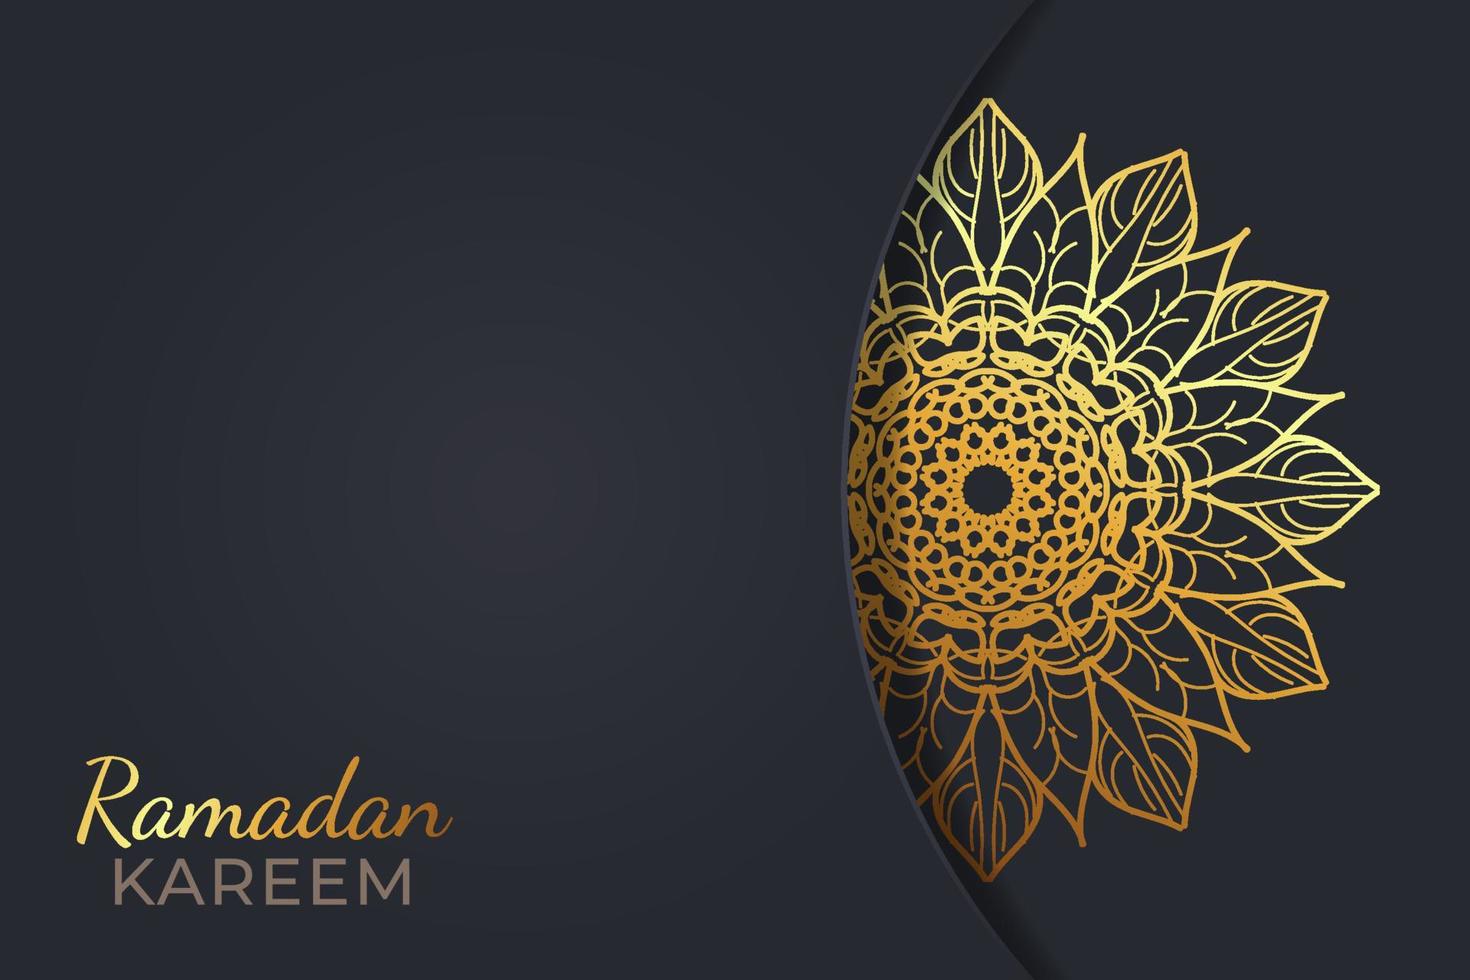 fond de ramadam kareem avec des ornements de mandala. vecteur